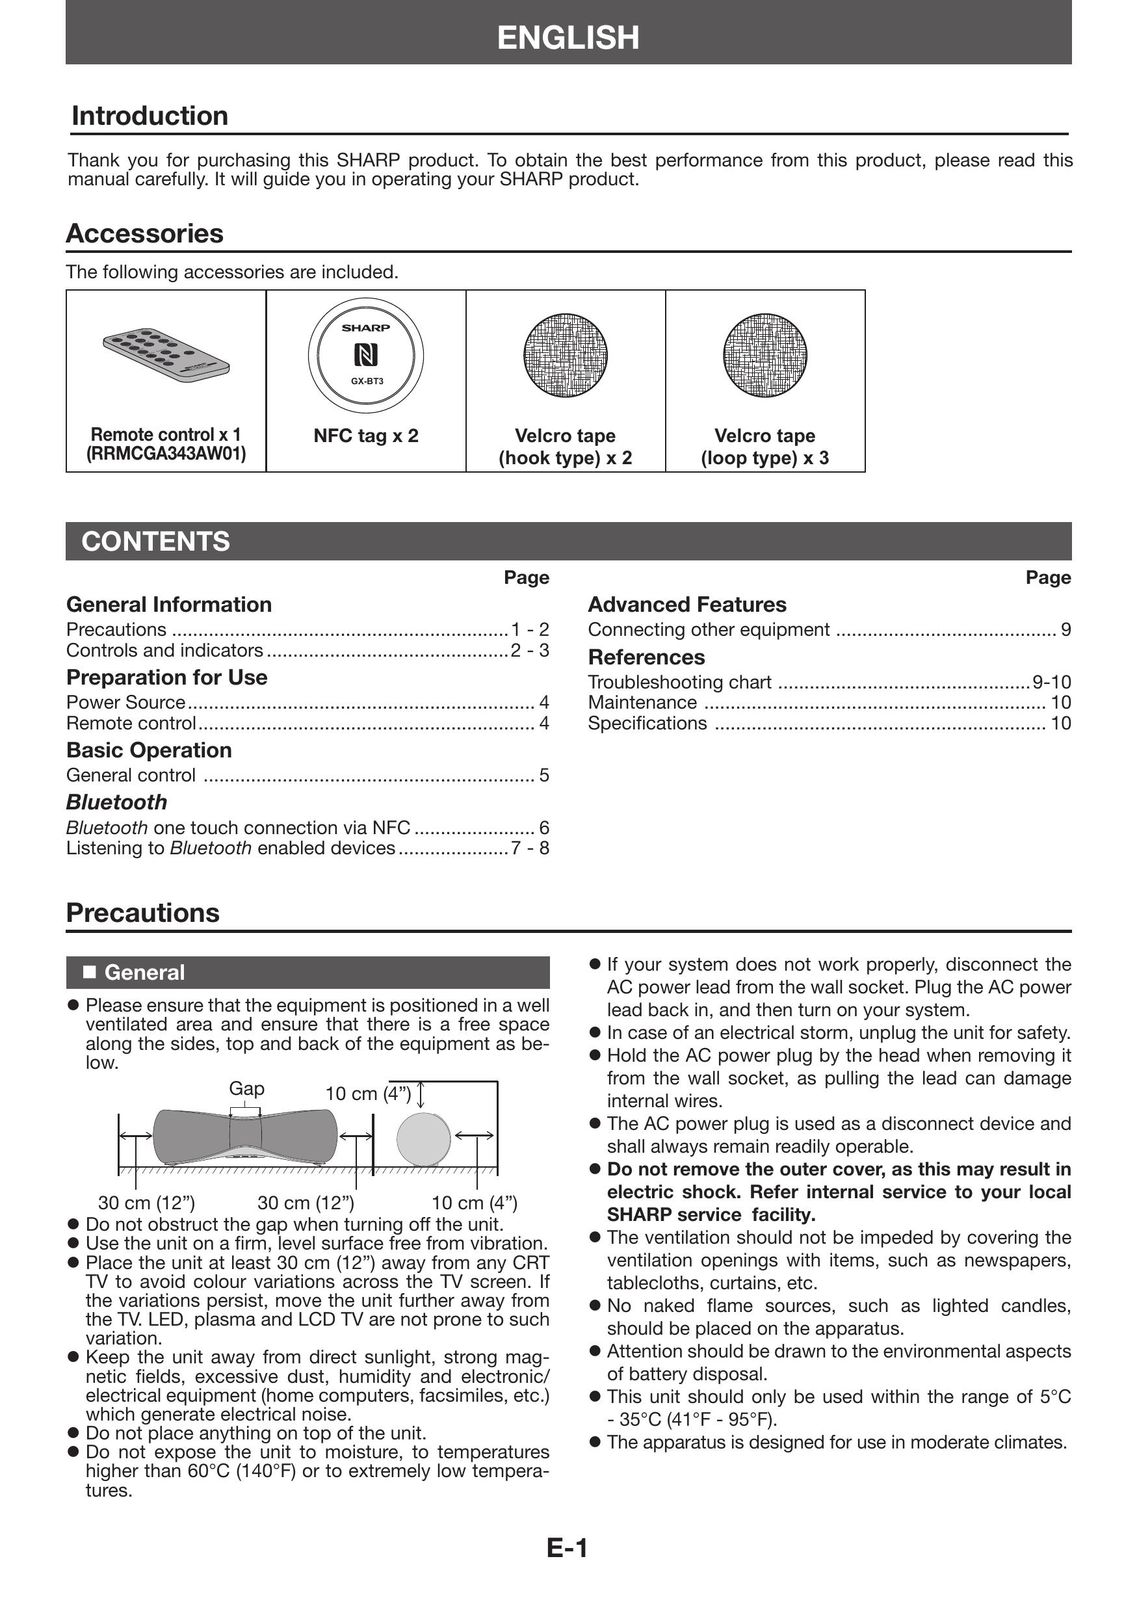 Sharp GX-BT3 Car Speaker User Manual